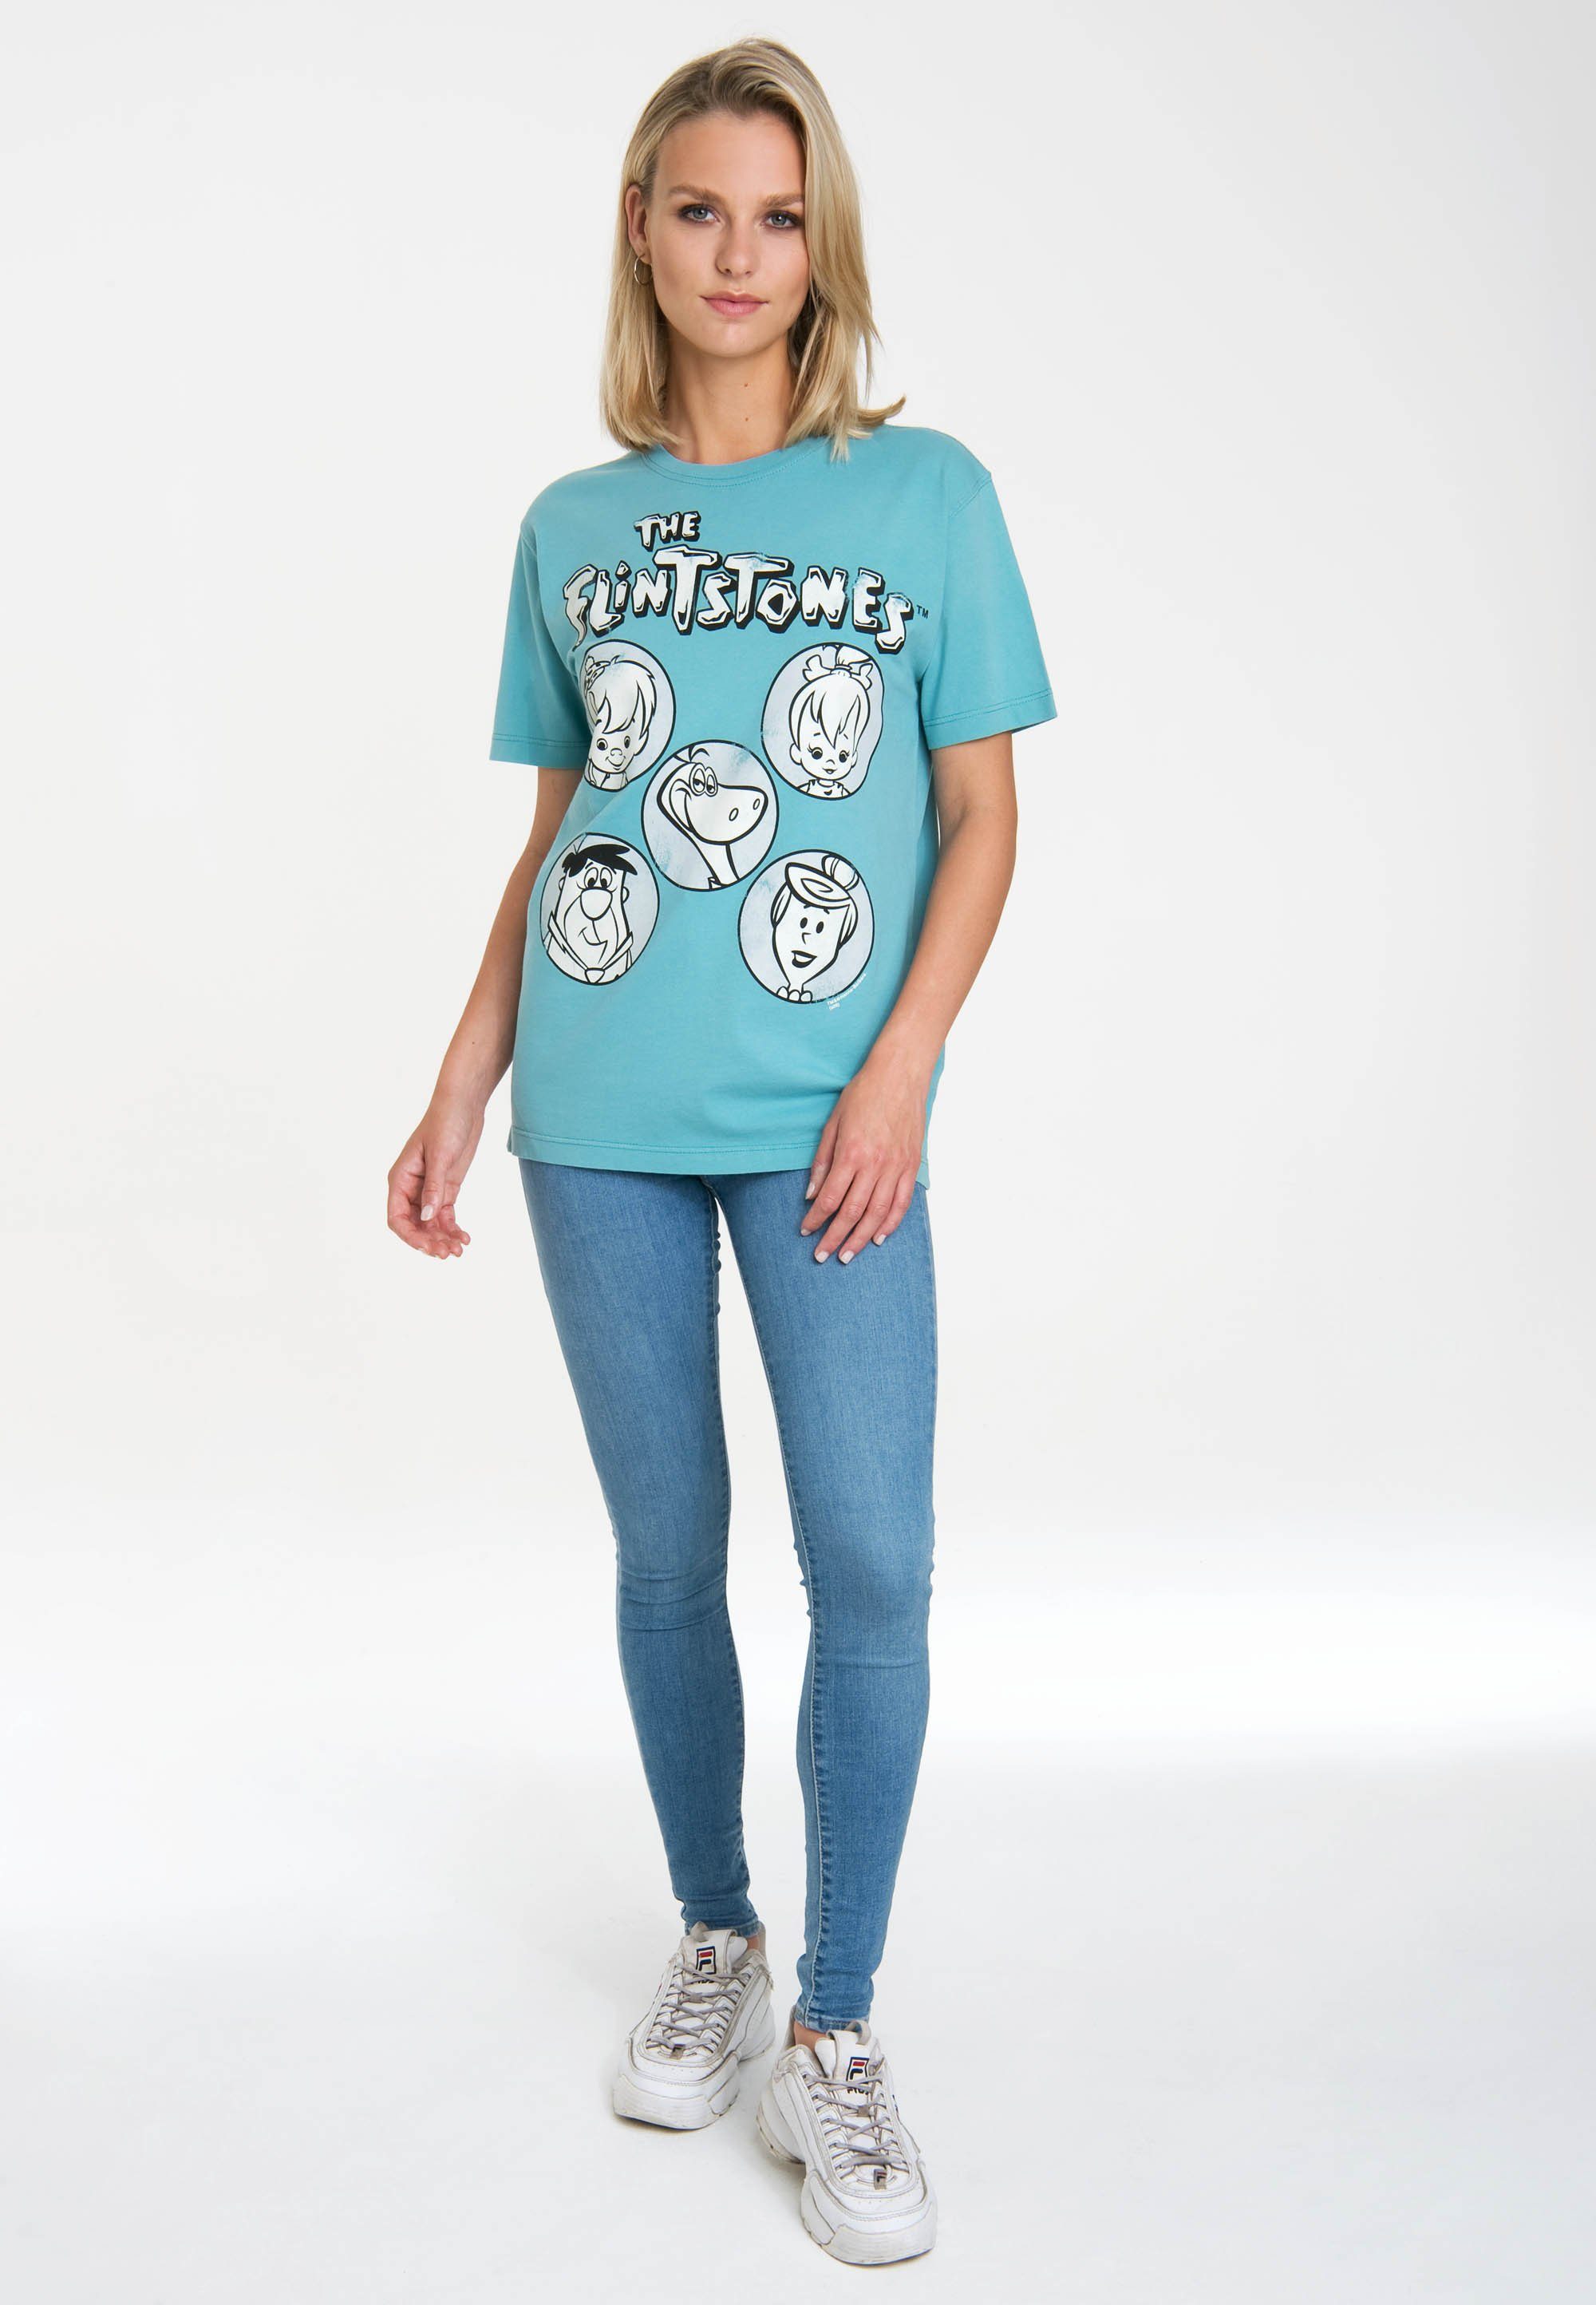 lizenziertem mit LOGOSHIRT The T-Shirt Flintstones Originaldesign